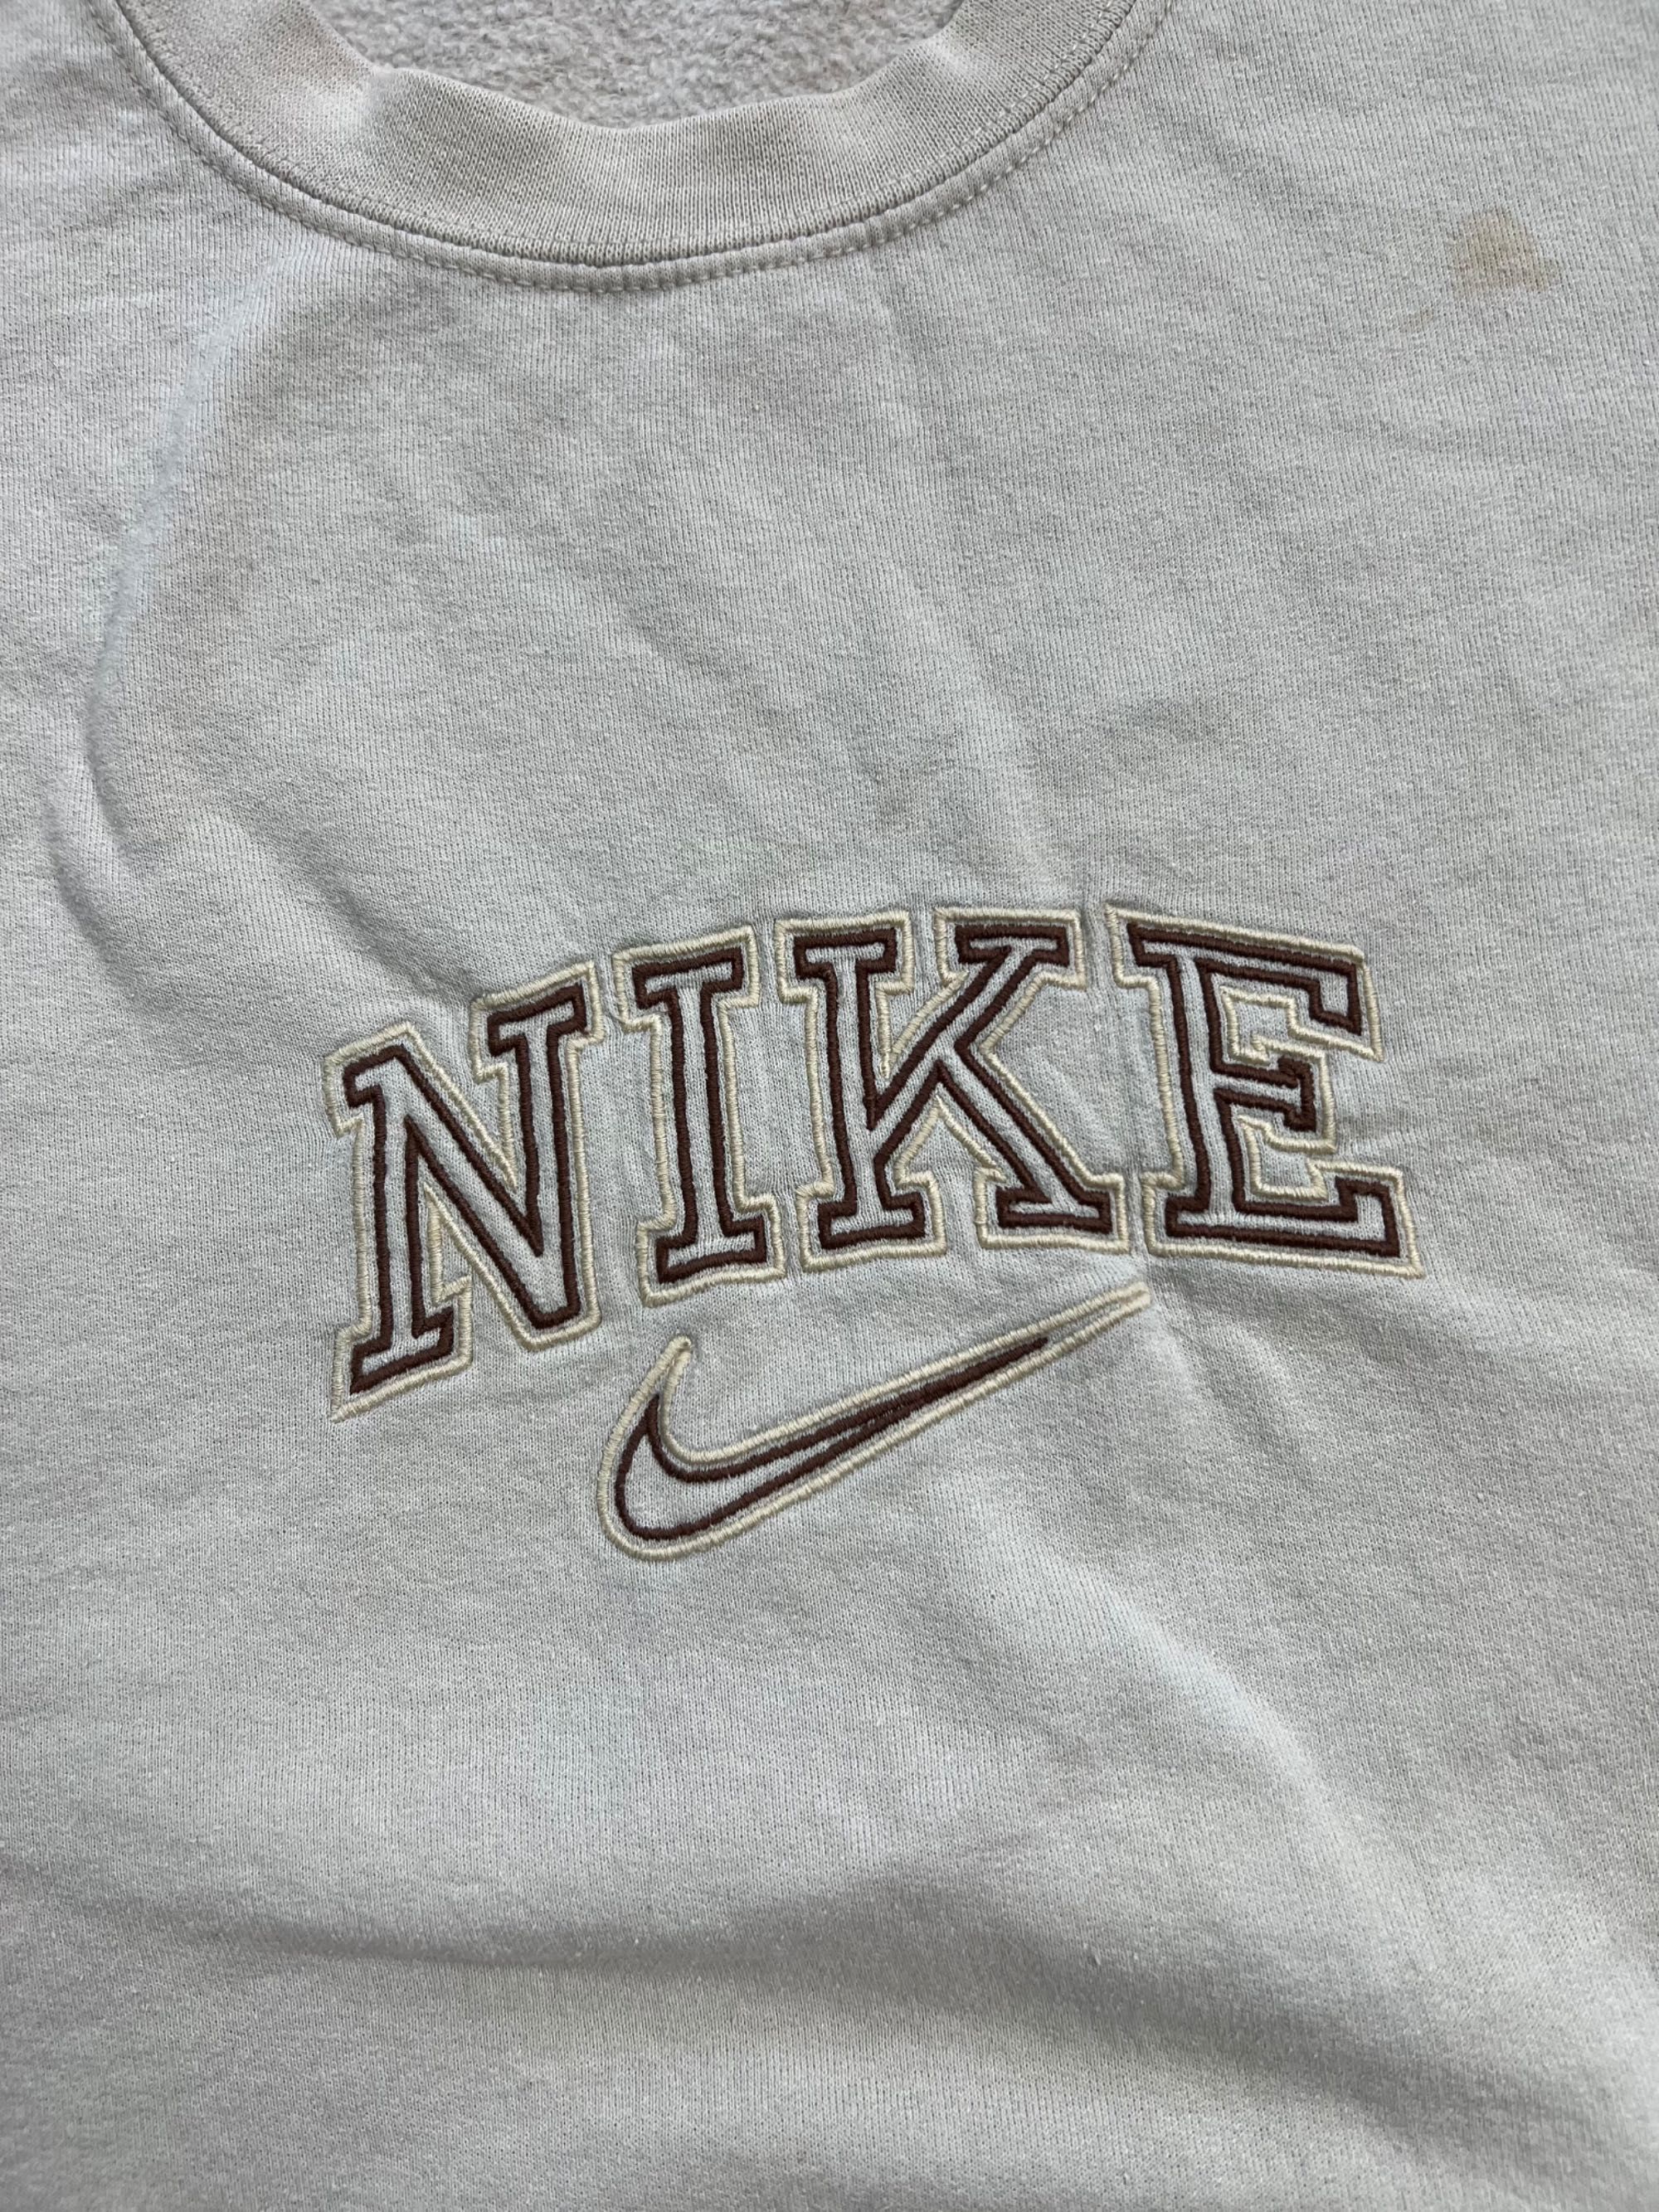 Bluza Nike big logo spellout vintage y2k unisex